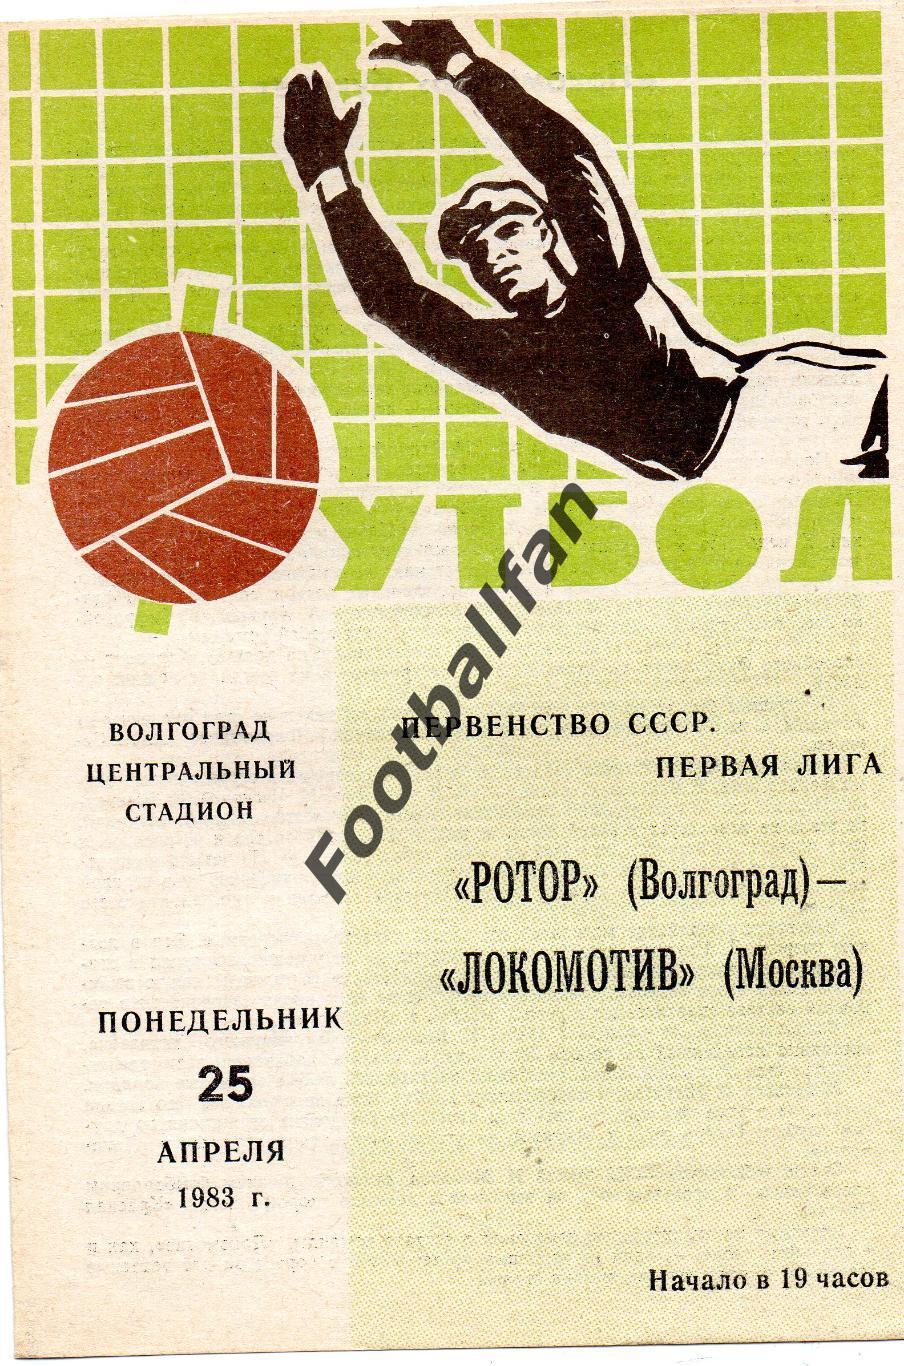 Ротор Волгоград - Локомотив Москва 25.04.1983